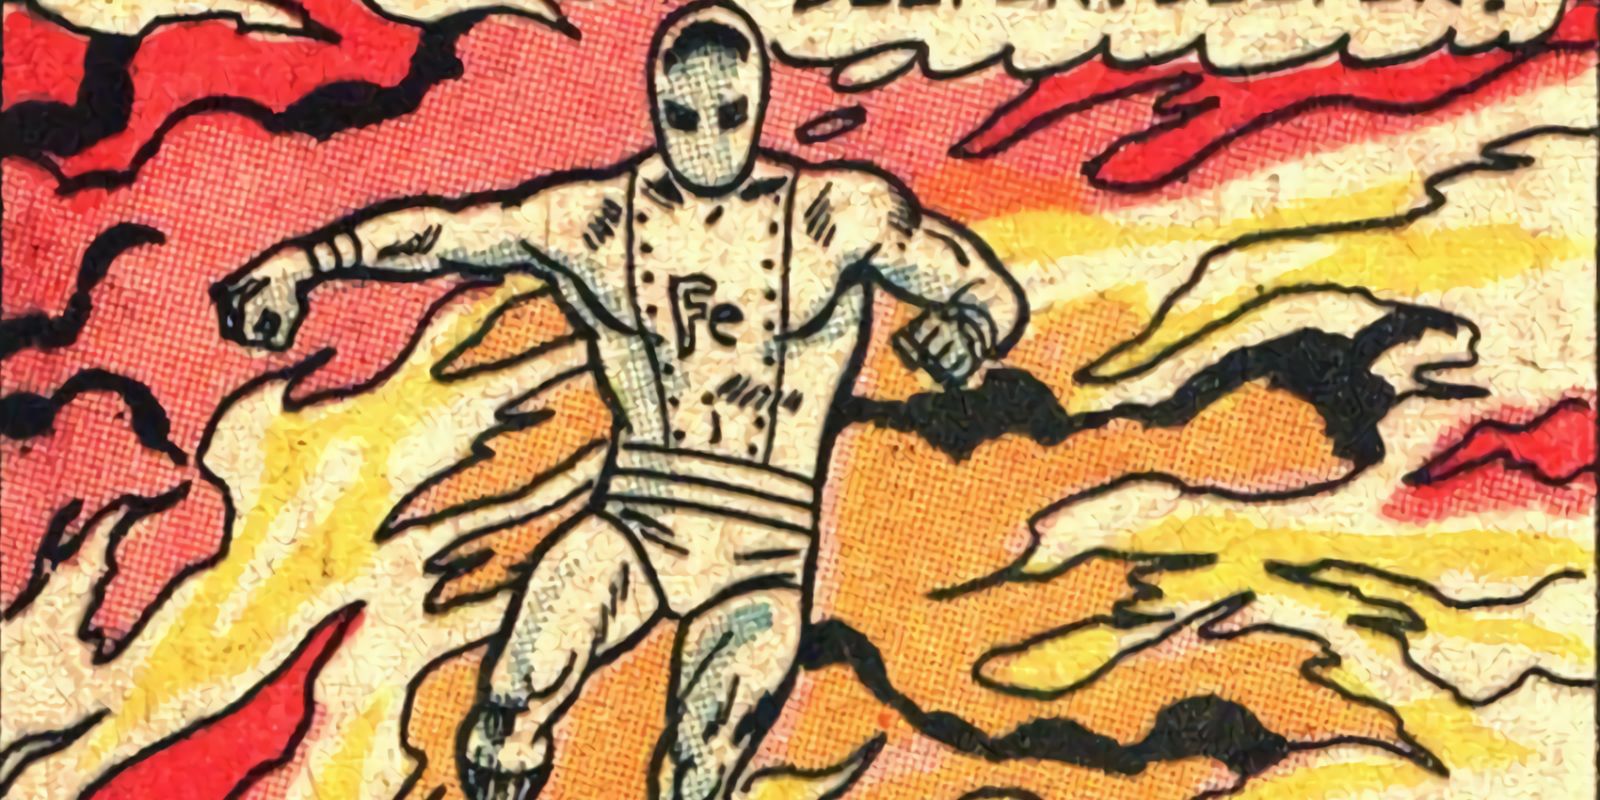 Ferro Lad running through fire in DC Comics